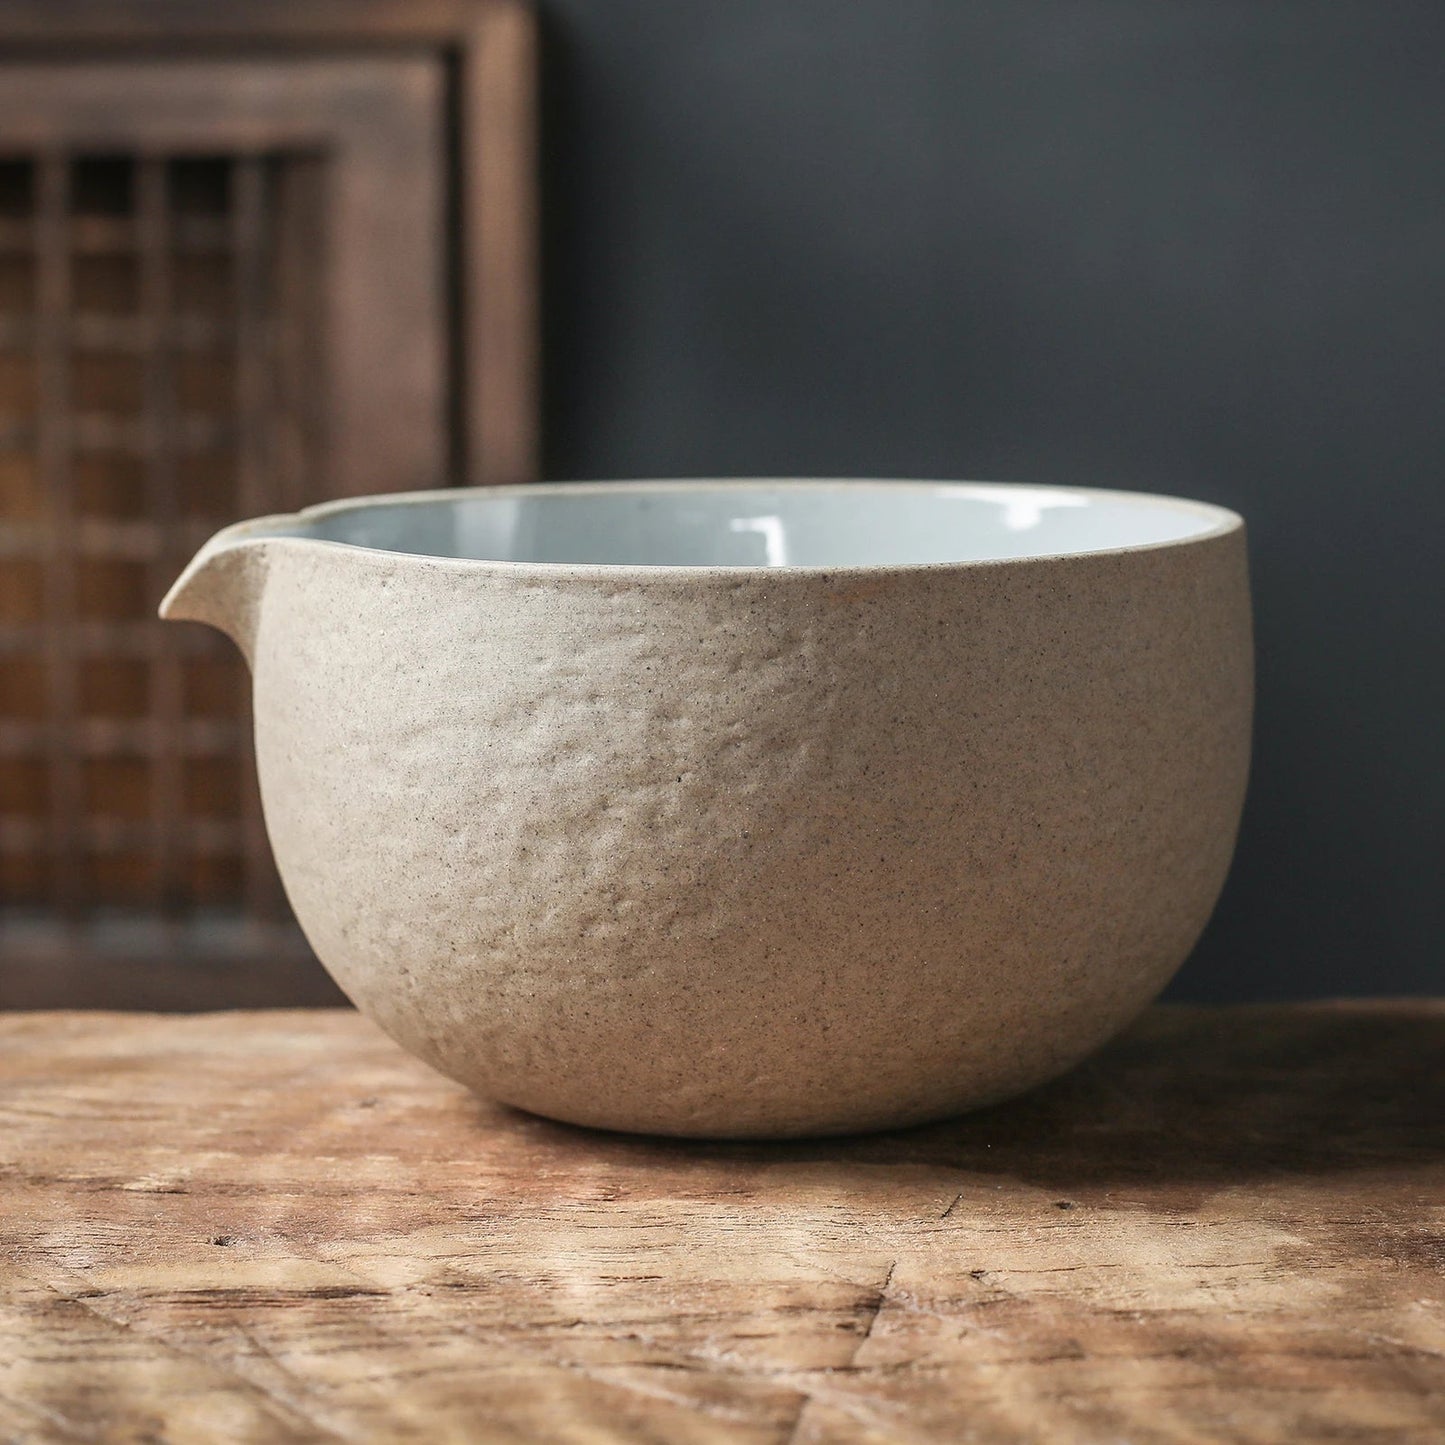 Japanese Ceramic Matcha Bowl with Whisk holder, Pouring Spout design, TG-K12